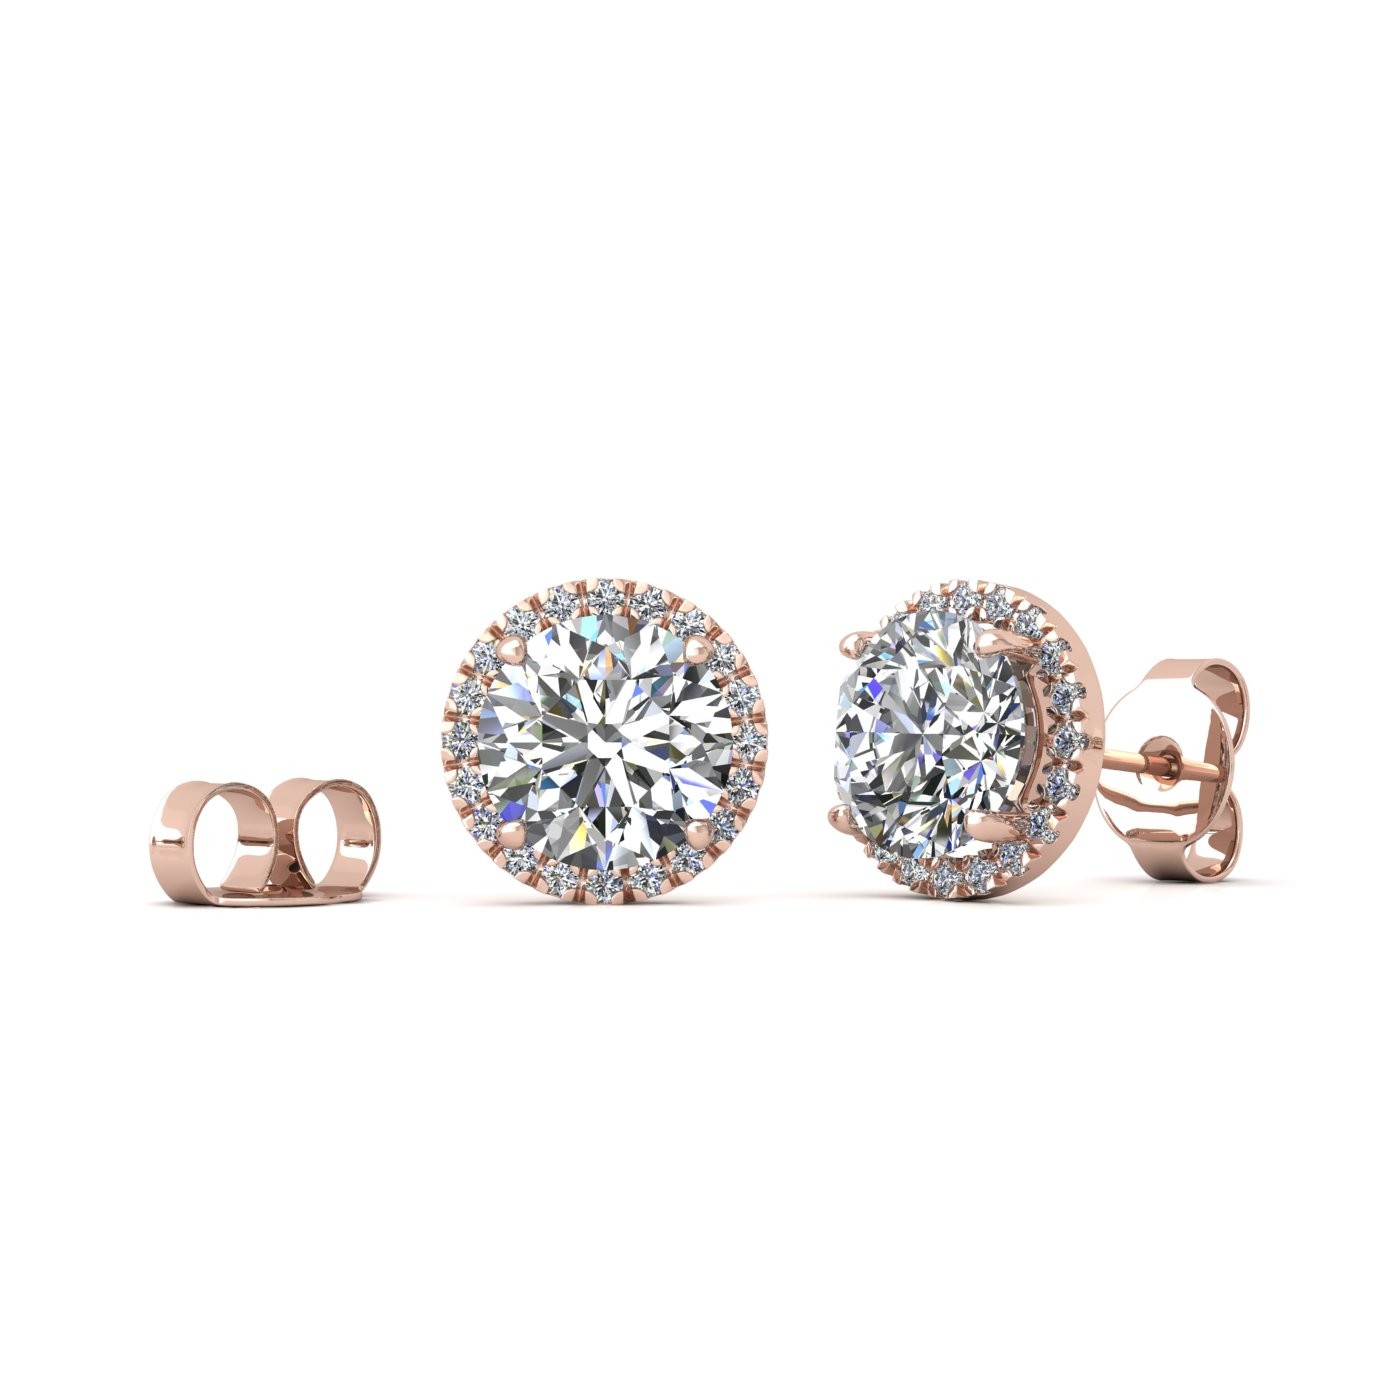 18k rose gold 2,5 ct each (5,0 tcw) 4 prongs round shape diamond earrings with diamond pavÉ set halo Photos & images